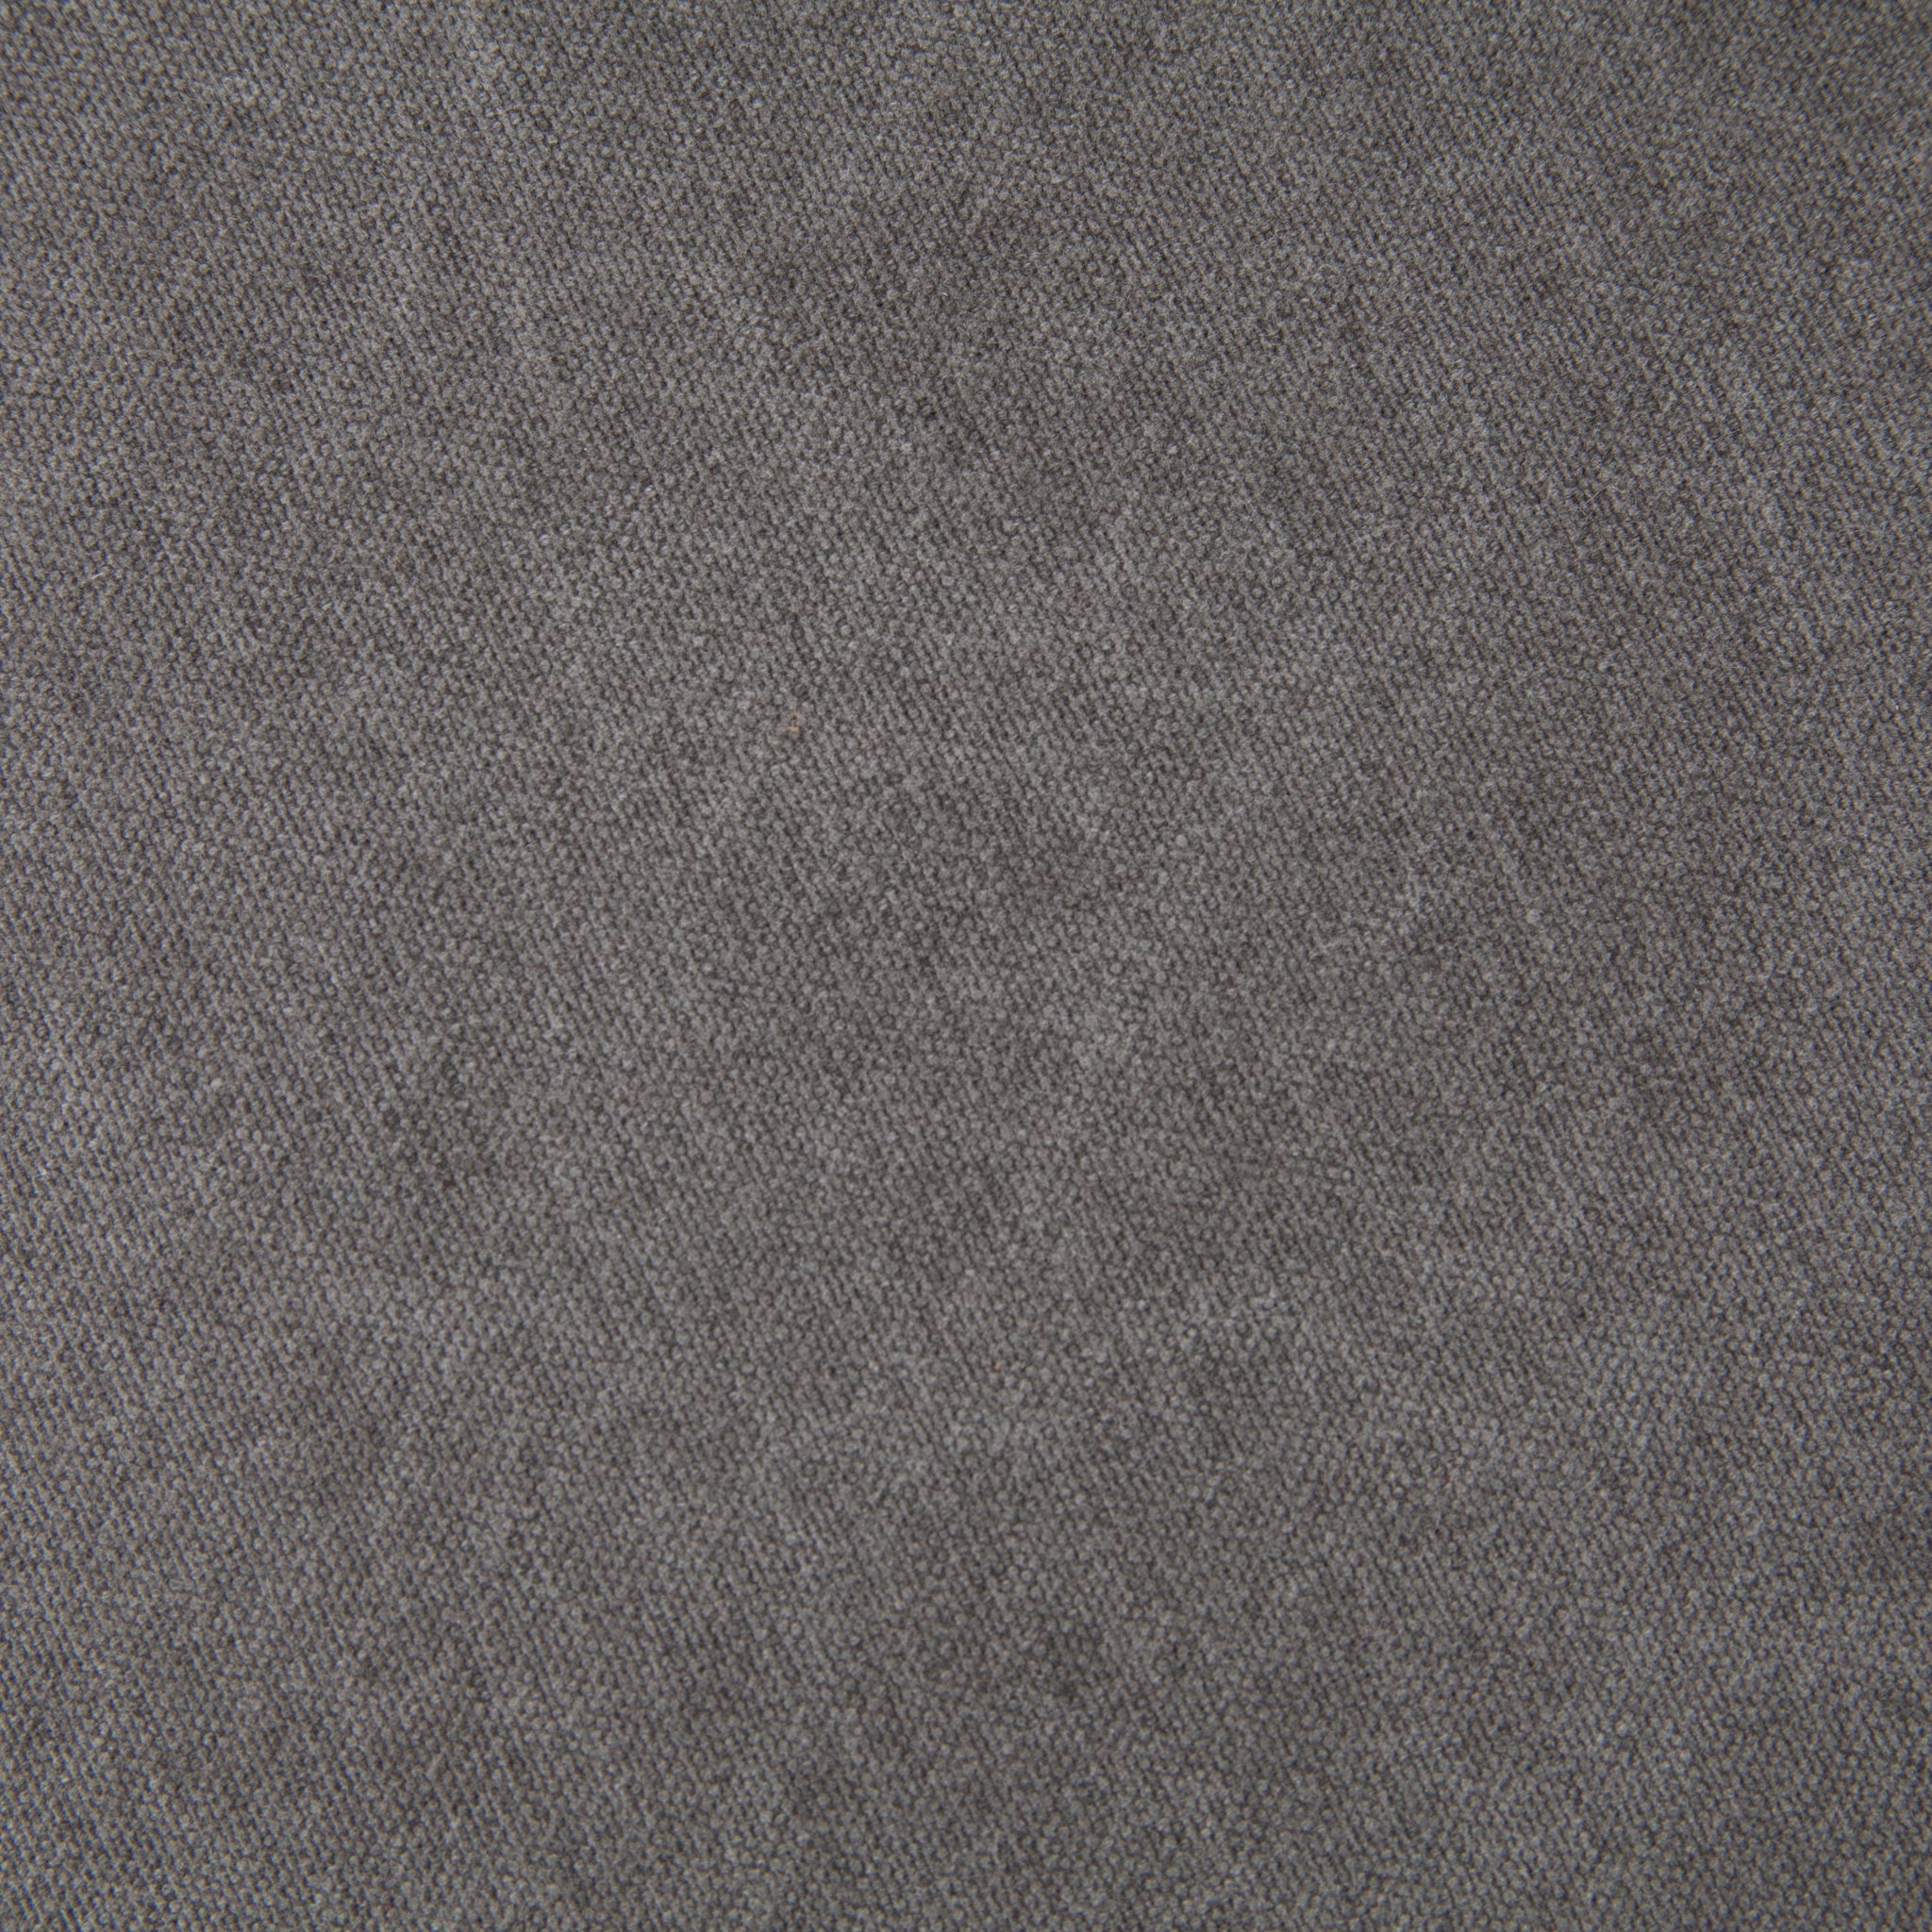 Stonewash Grey Fabric with Waxed Black Iron (Counter Height) | Wharton Bar/Counter Stool | Valley Ridge Furniture